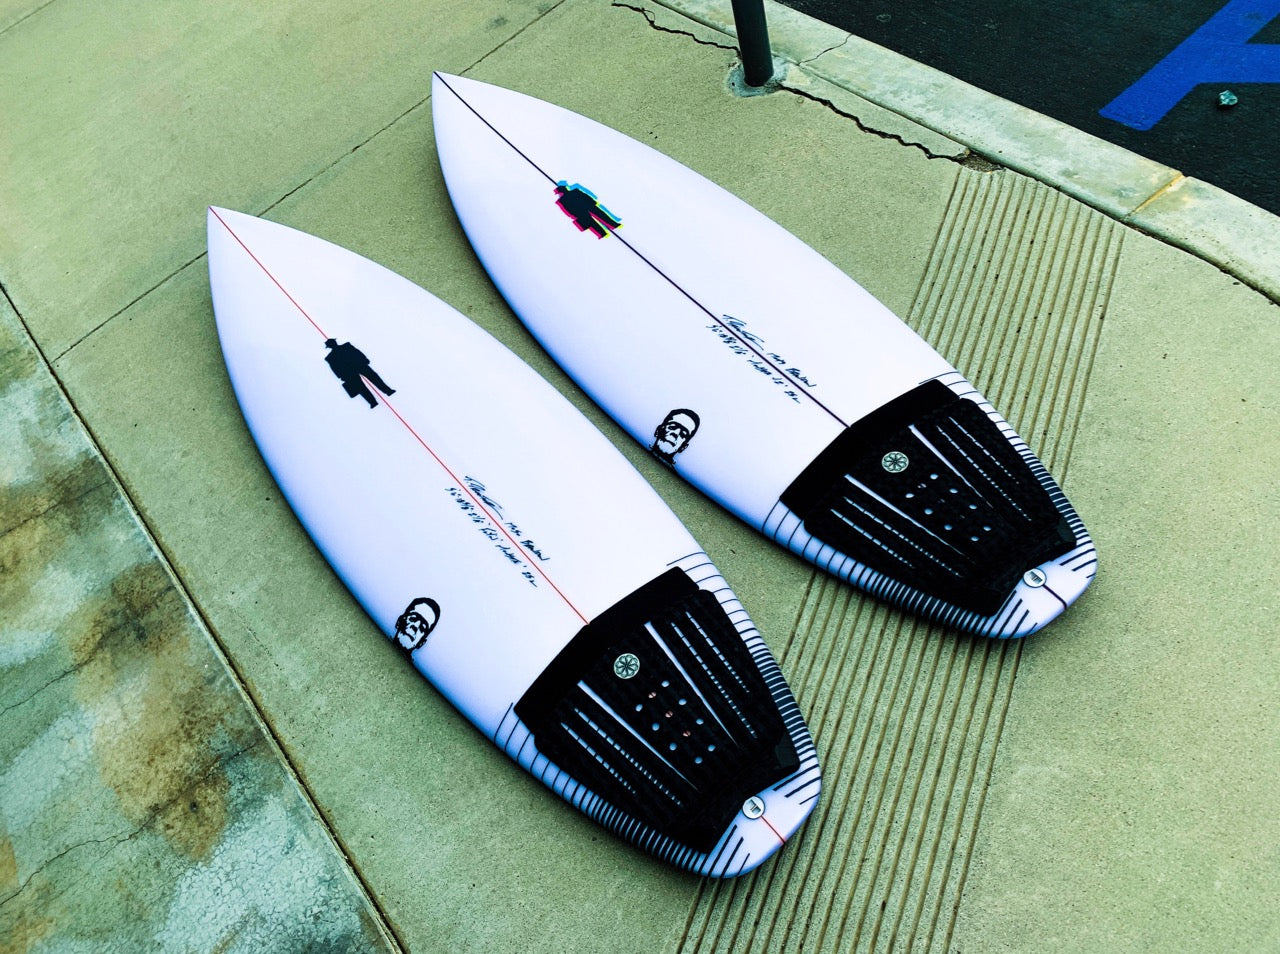 The Ultimate Crosstrainer for Surfing, Carver Super Slab collab with T –  Proctor Surfboard Shop